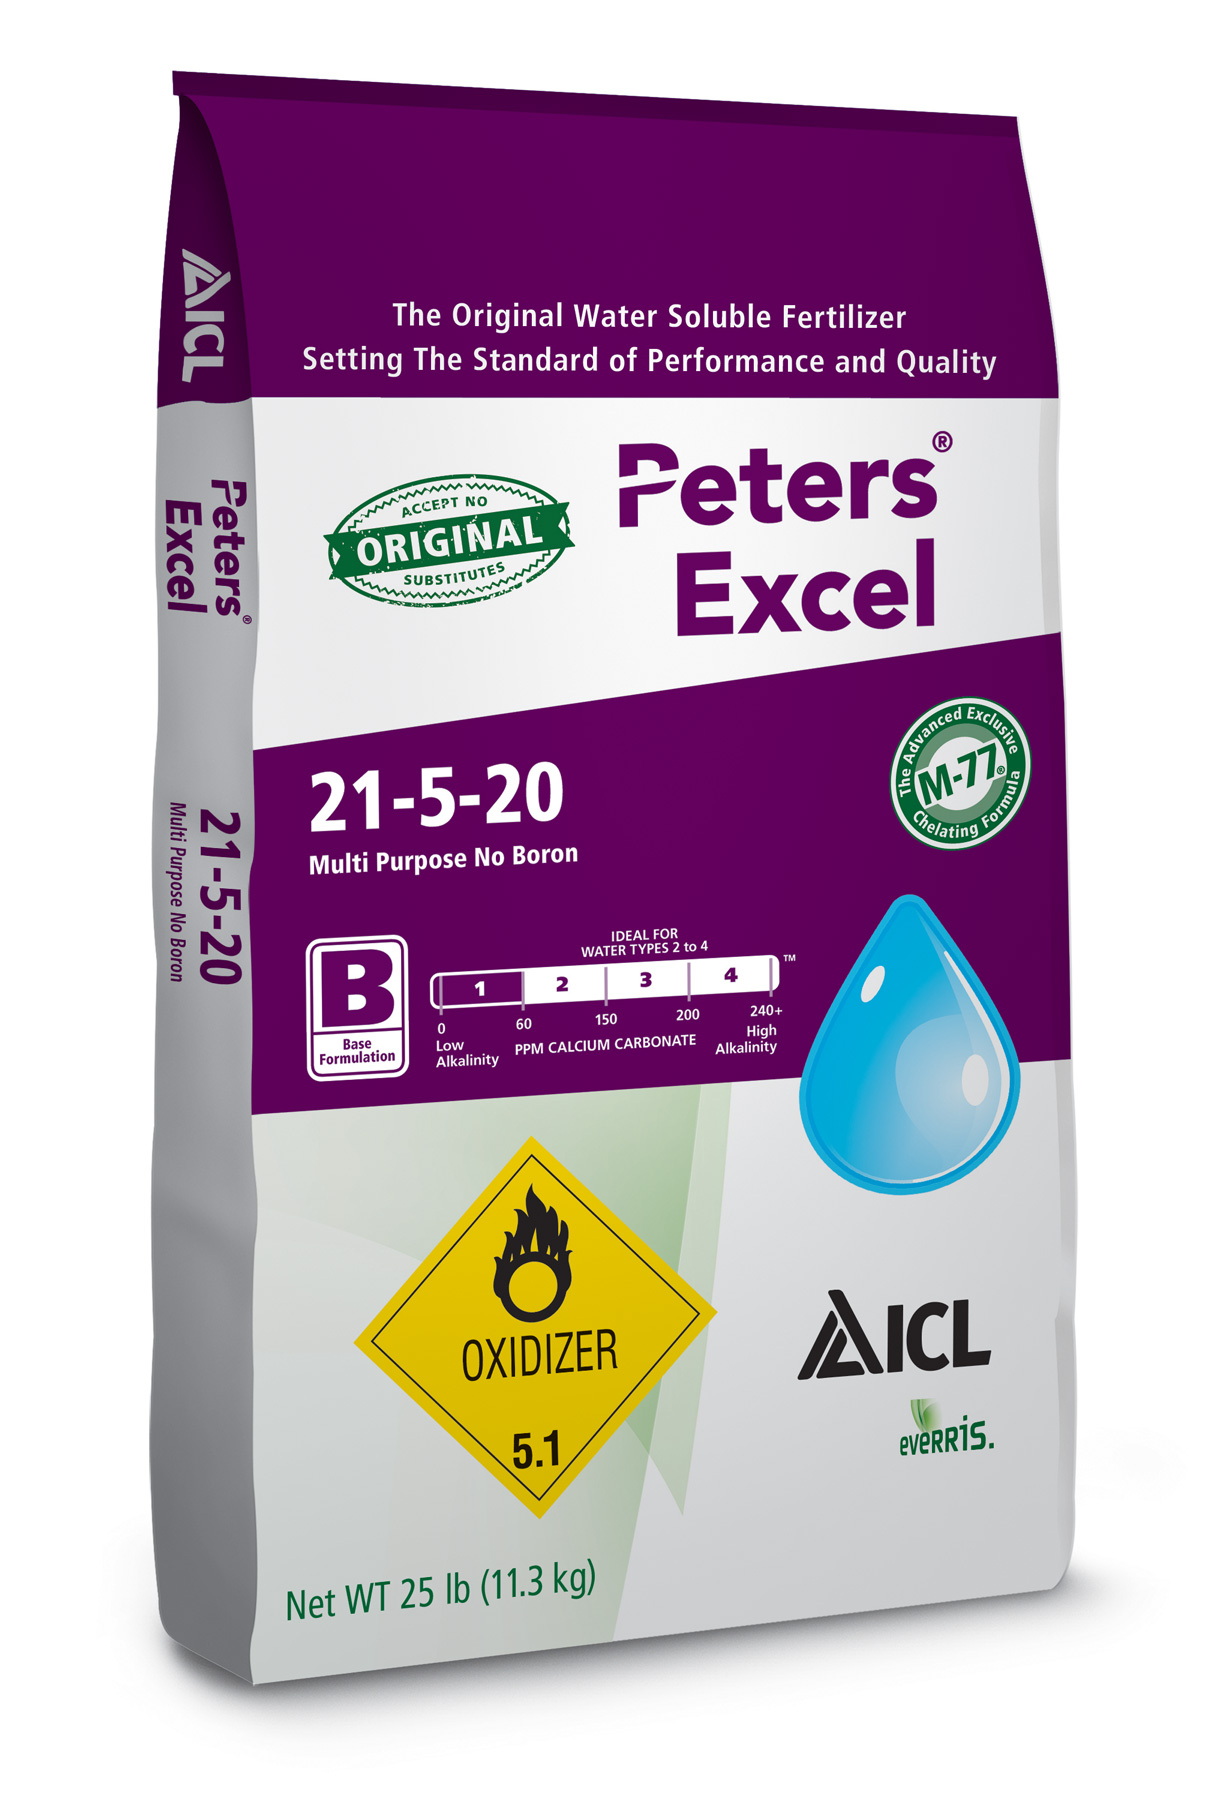 Peters Excel 21-5-20 Multi Purpose No Boron 25 lb Bag - Water Soluble Fertilizer